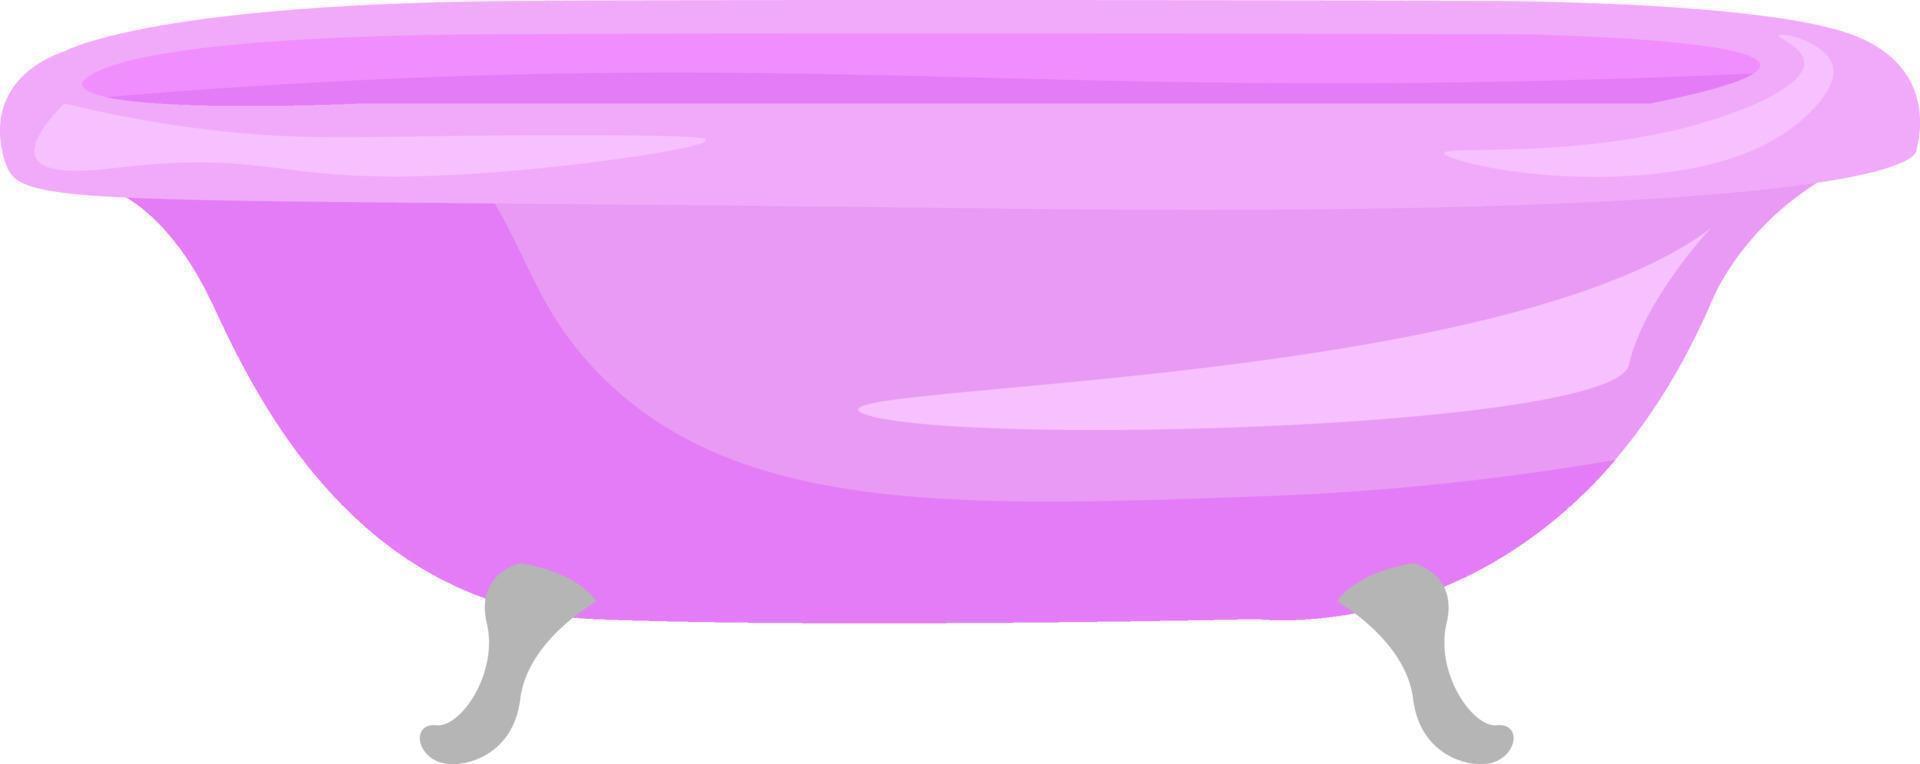 Pink bathtub, illustration, vector on white background